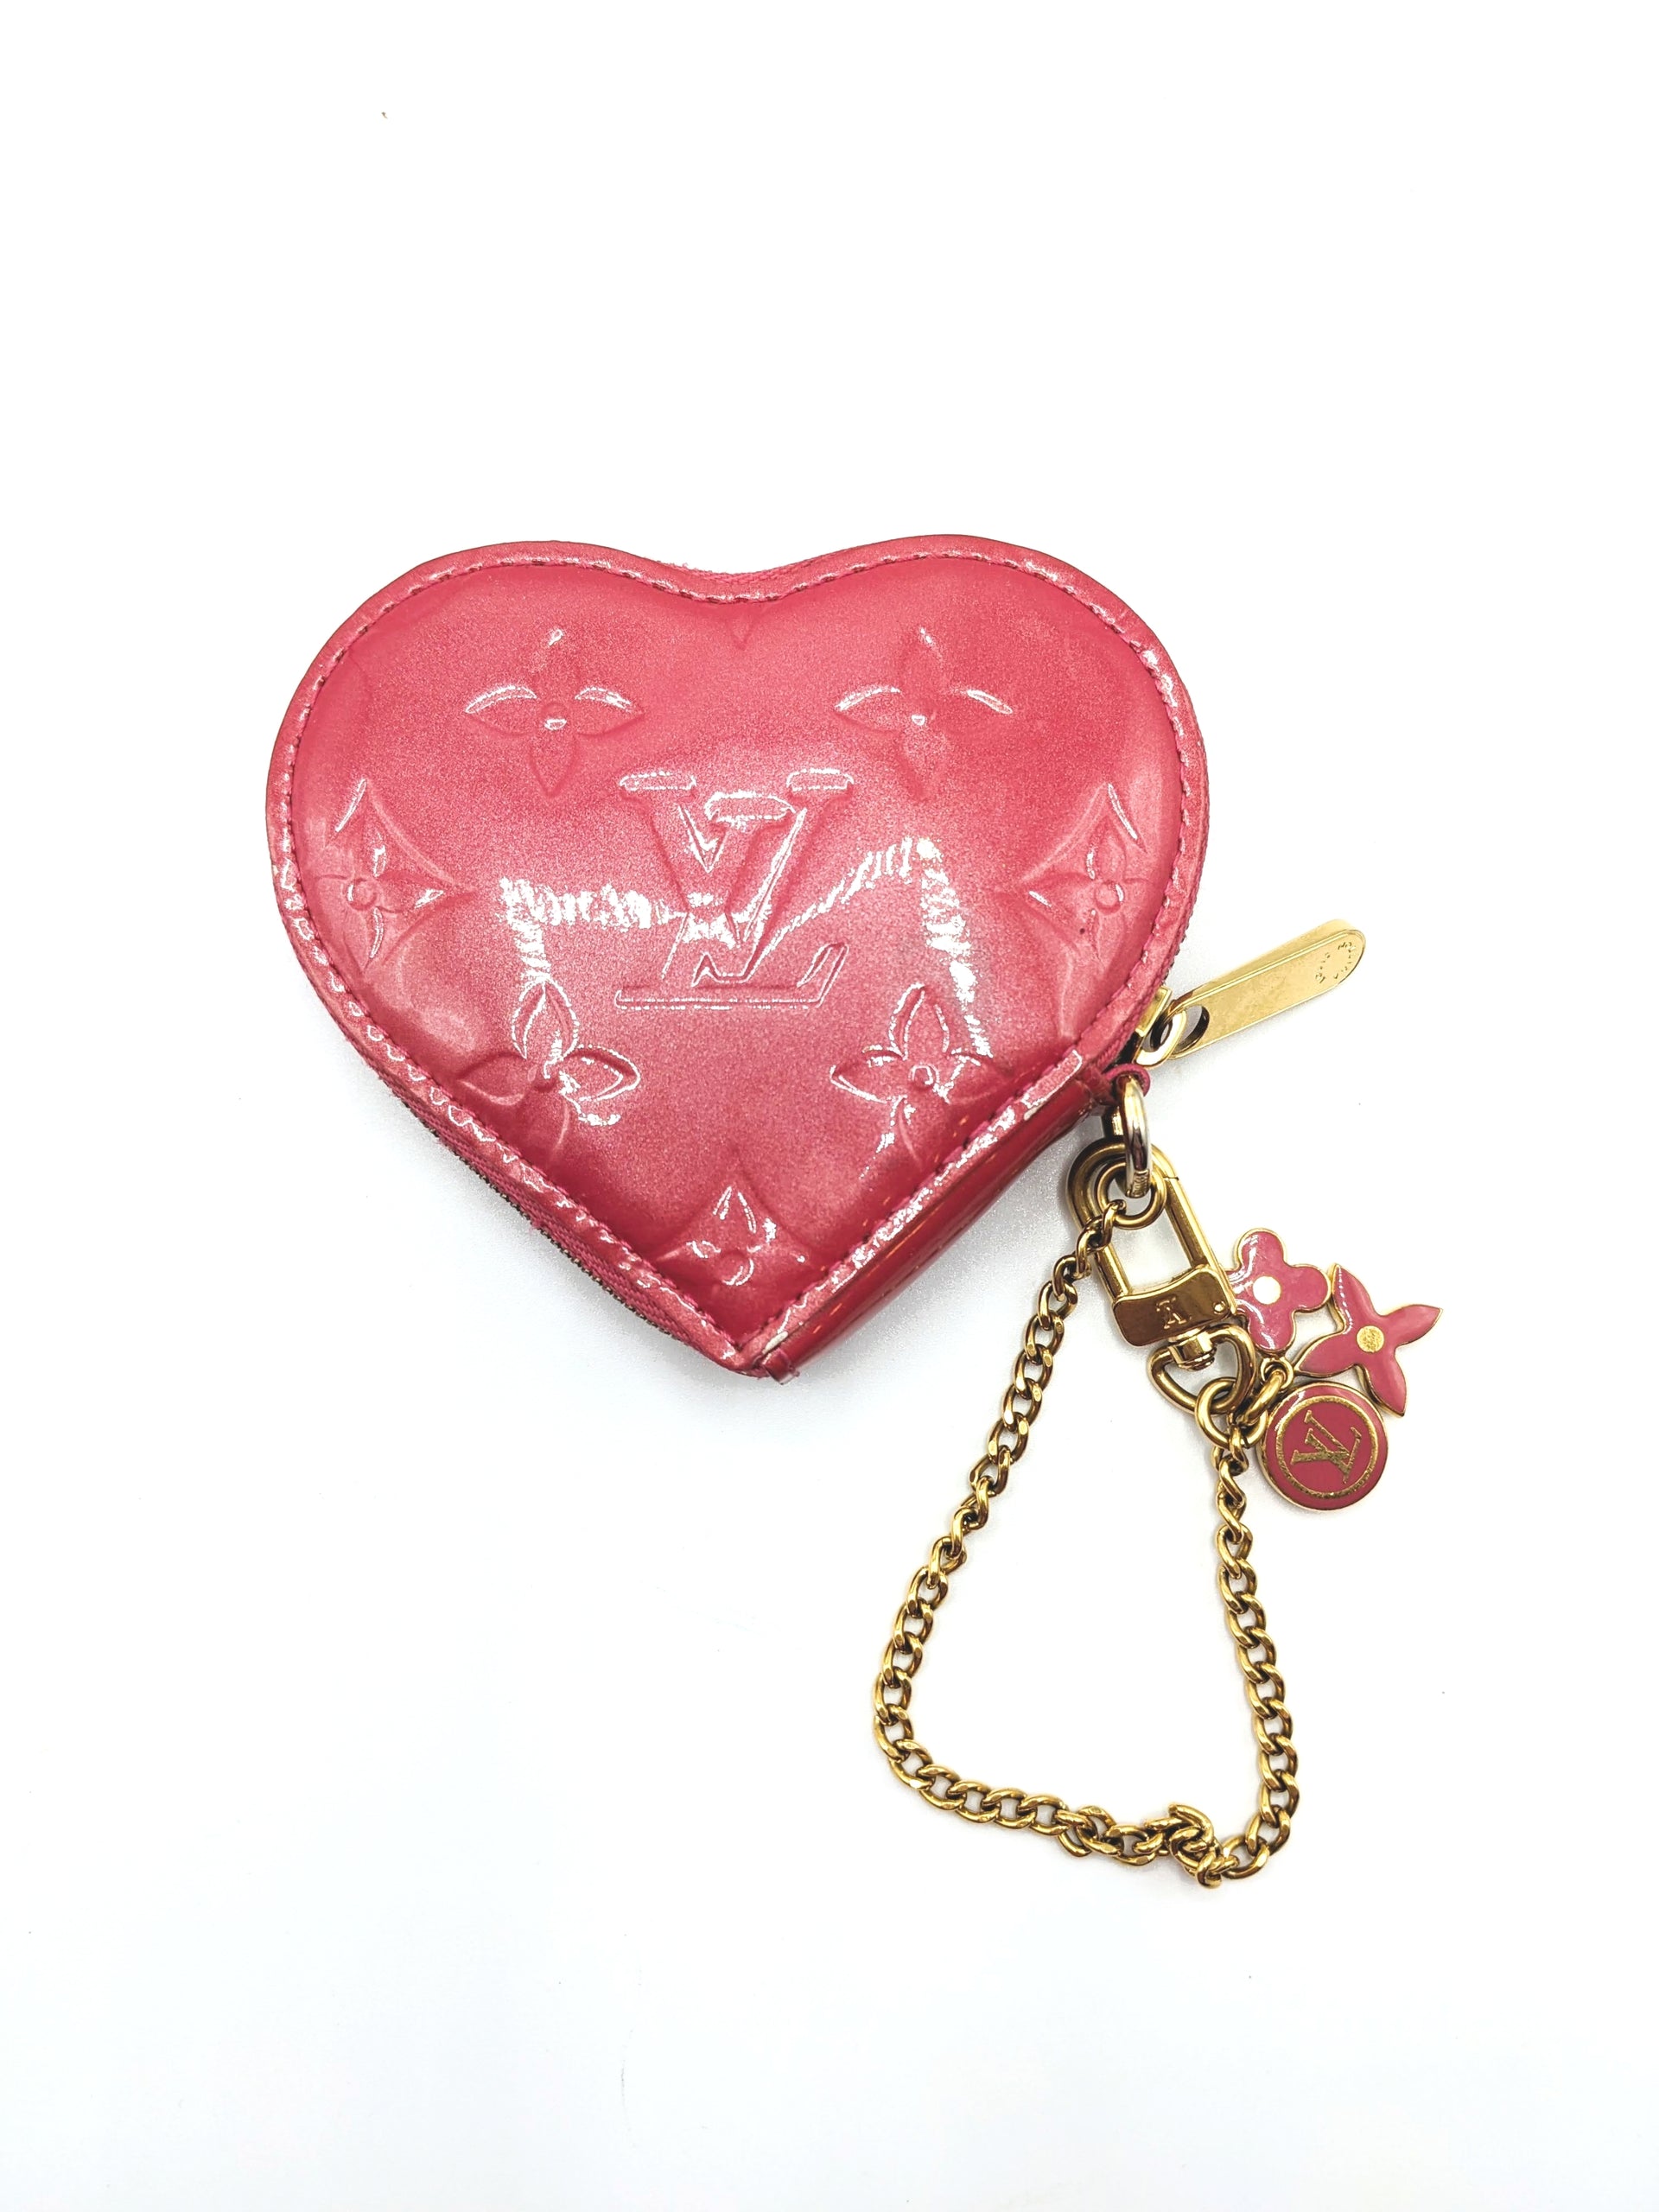 Louis Vuitton Rose Indian Sweet Monogram Vernis Heart Coin Purse